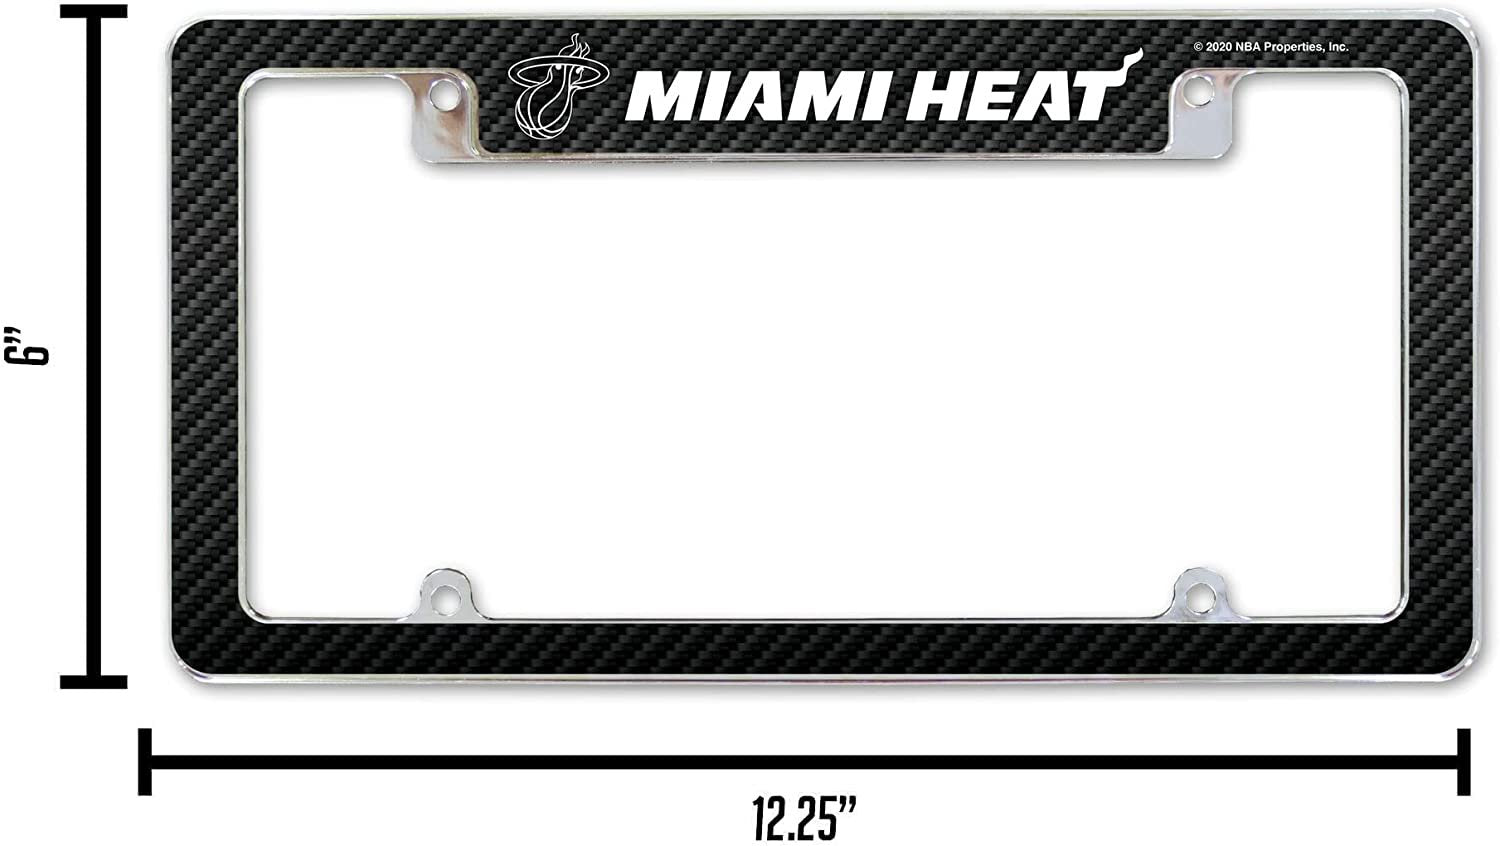 Miami Heat Metal License Plate Frame Chrome Tag Cover Carbon Fiber Design 6x12 Inch